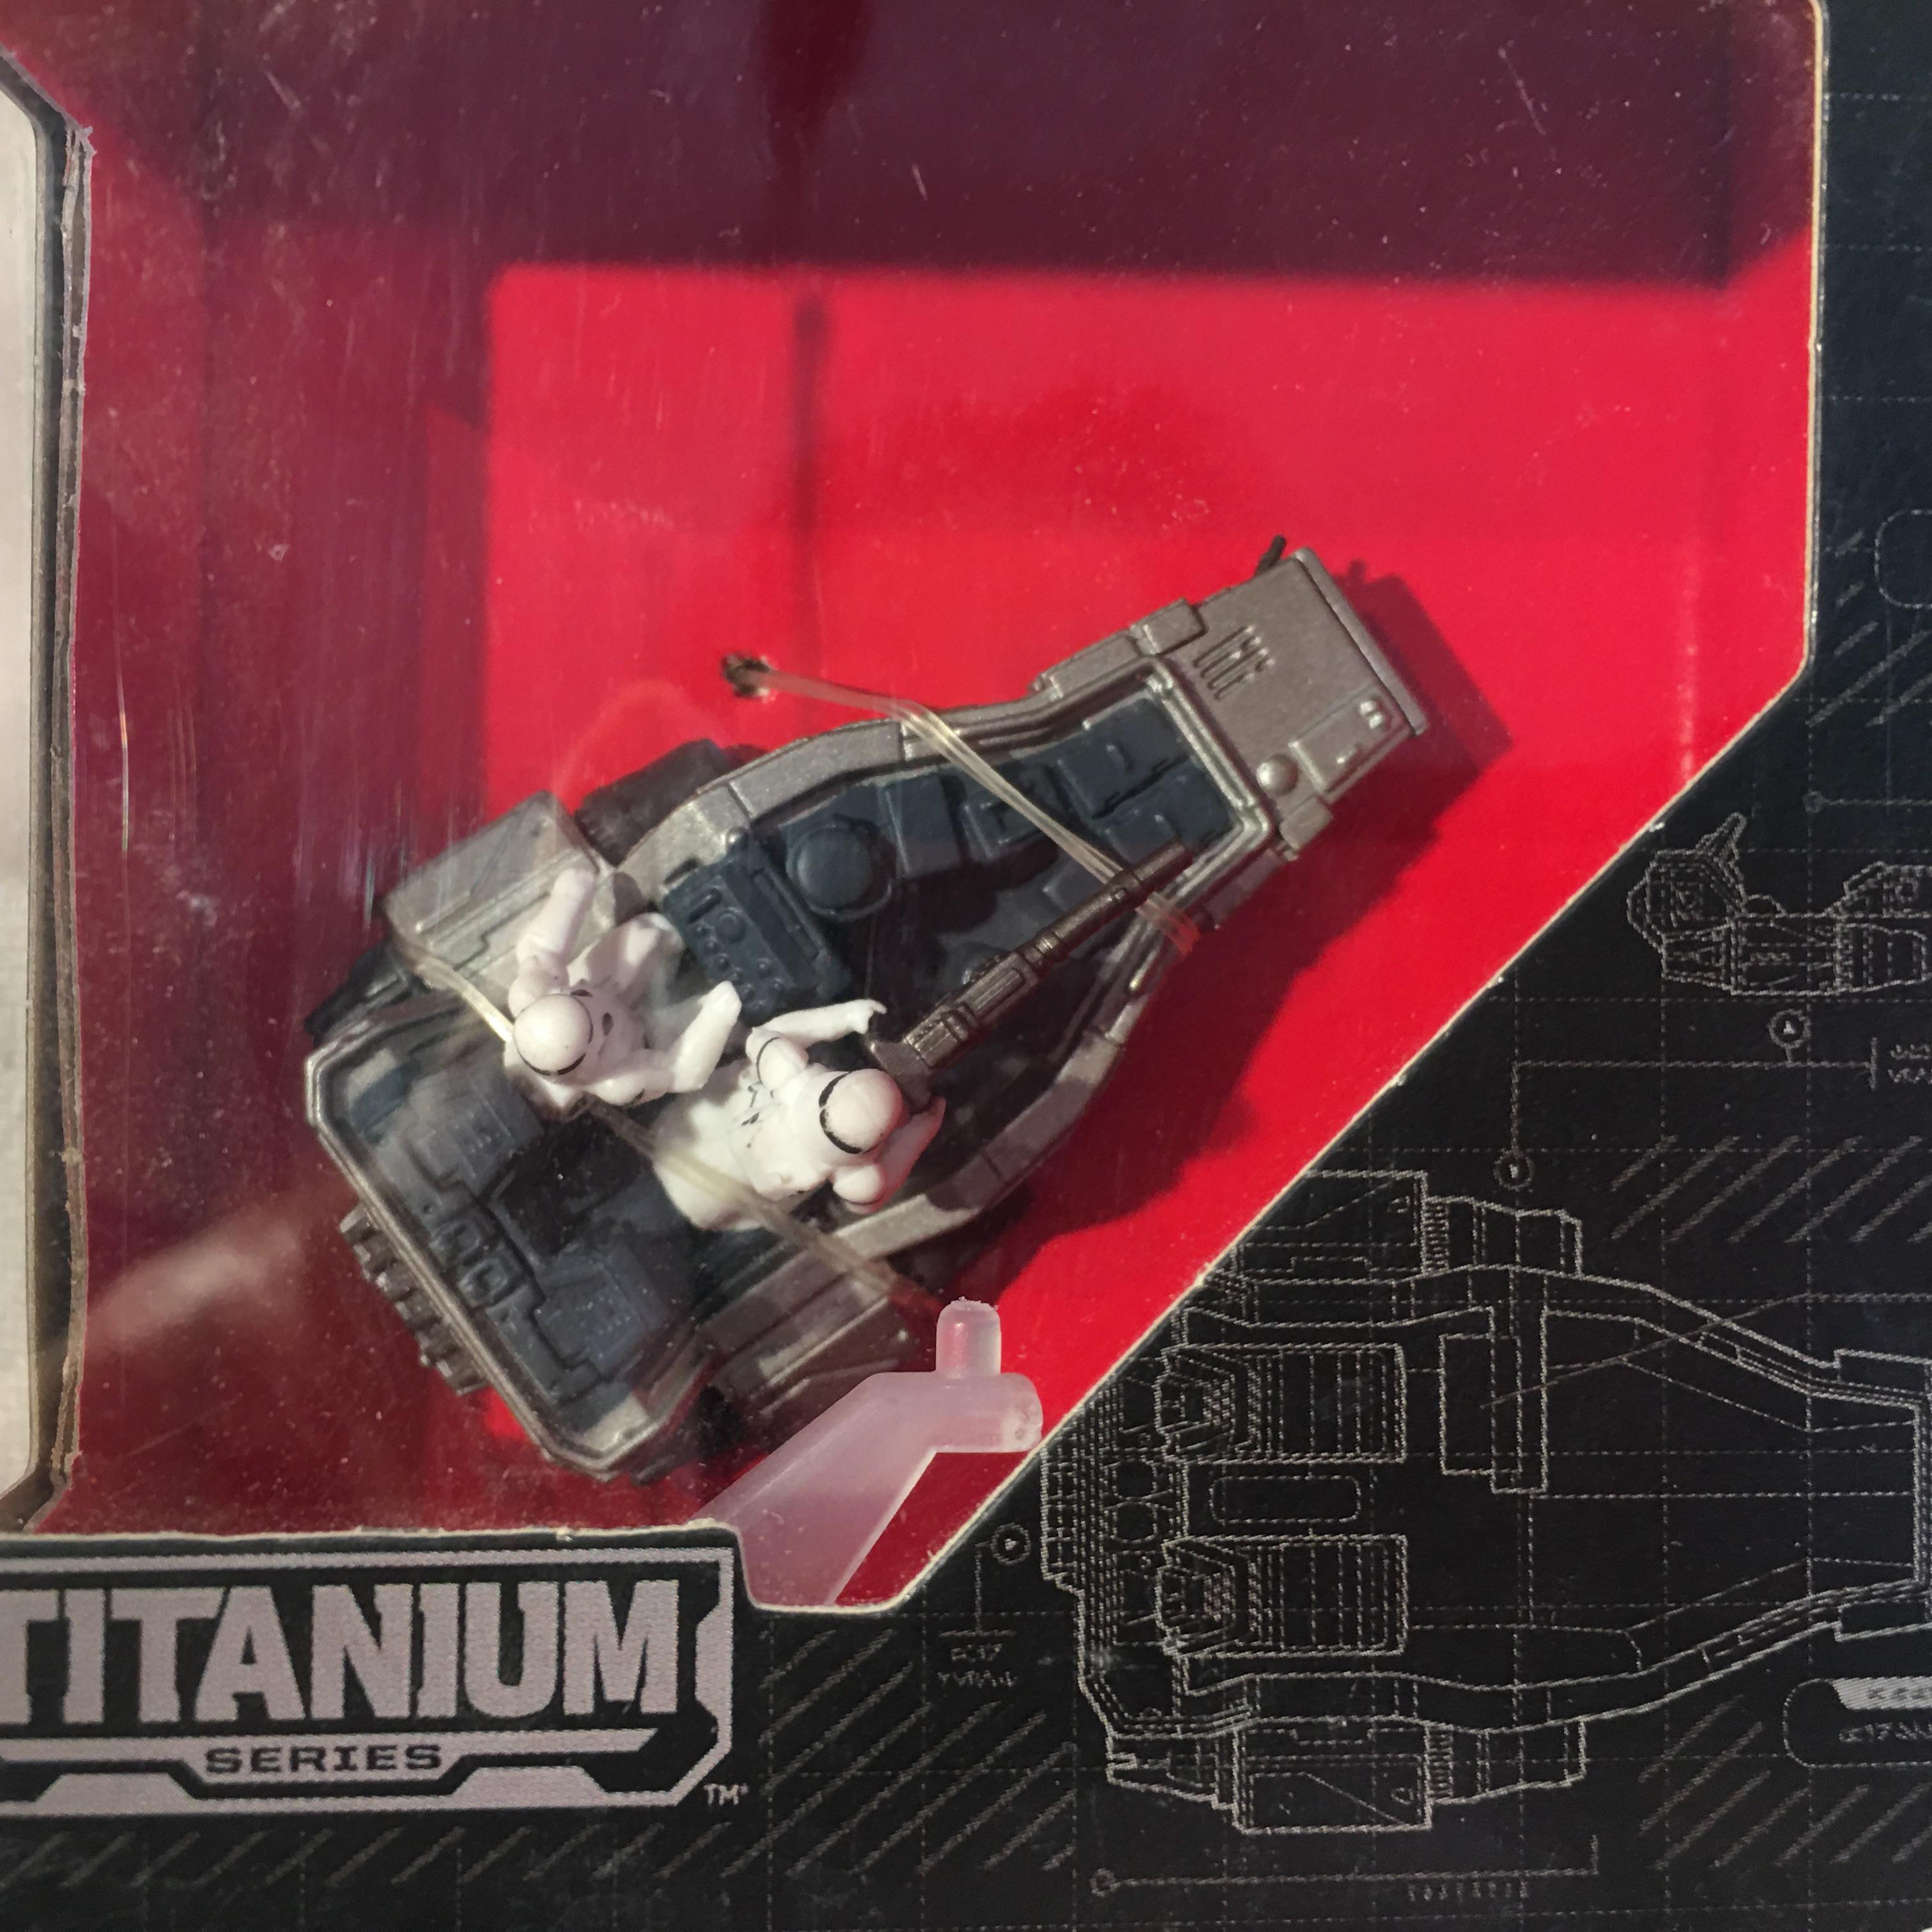 NIB Collector Star Wars The Black Series Titanium Series Snowspeeder #11 Box Size: 5x4"